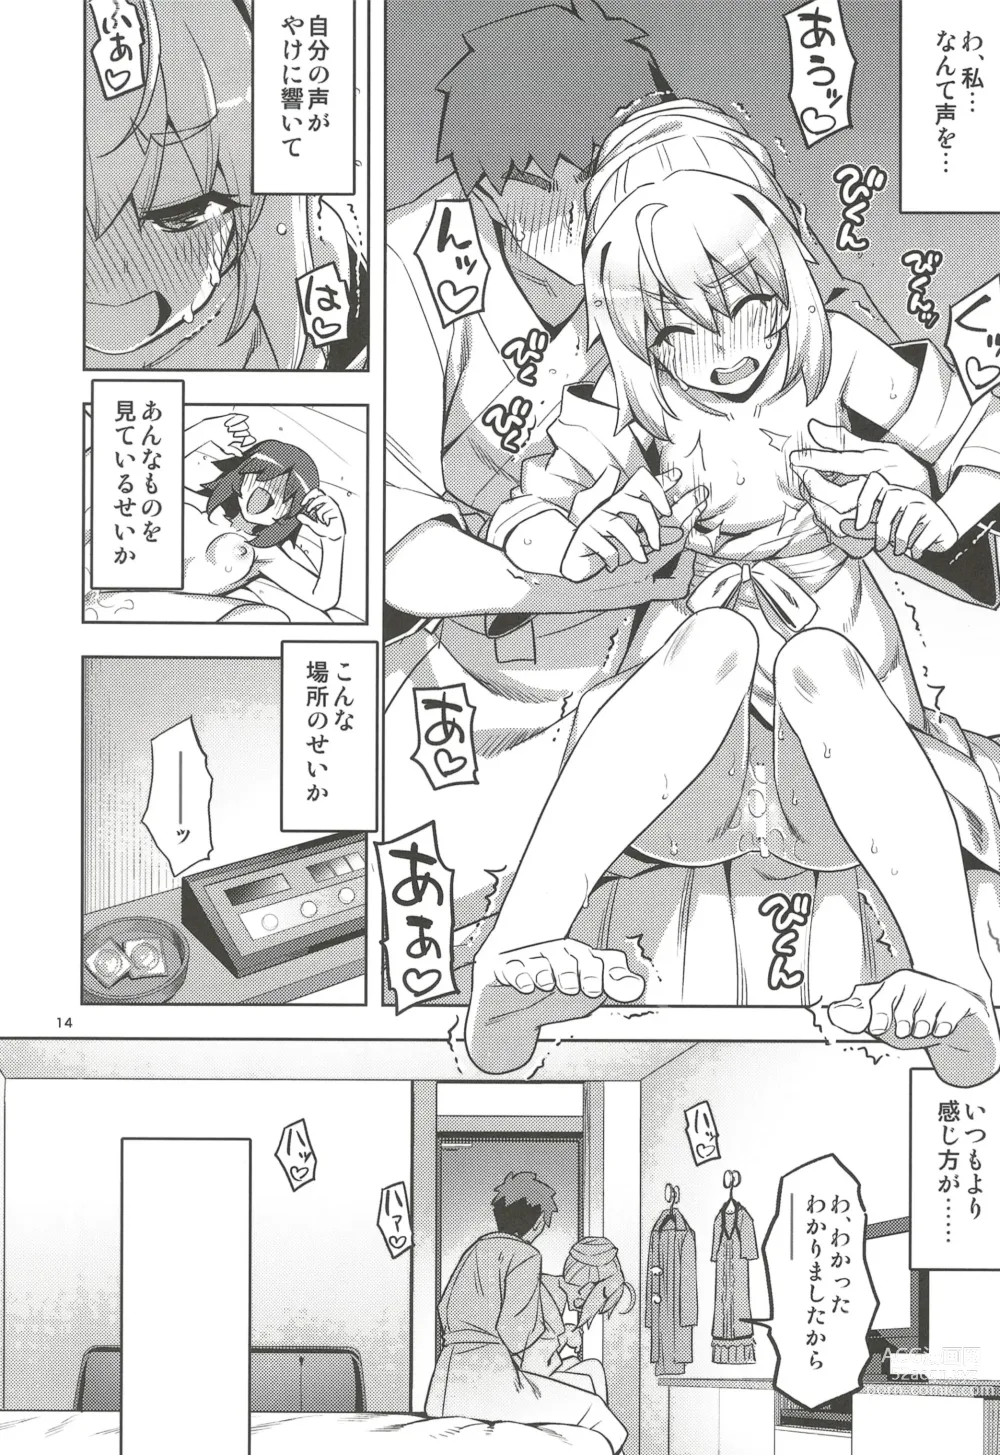 Page 14 of doujinshi RE32